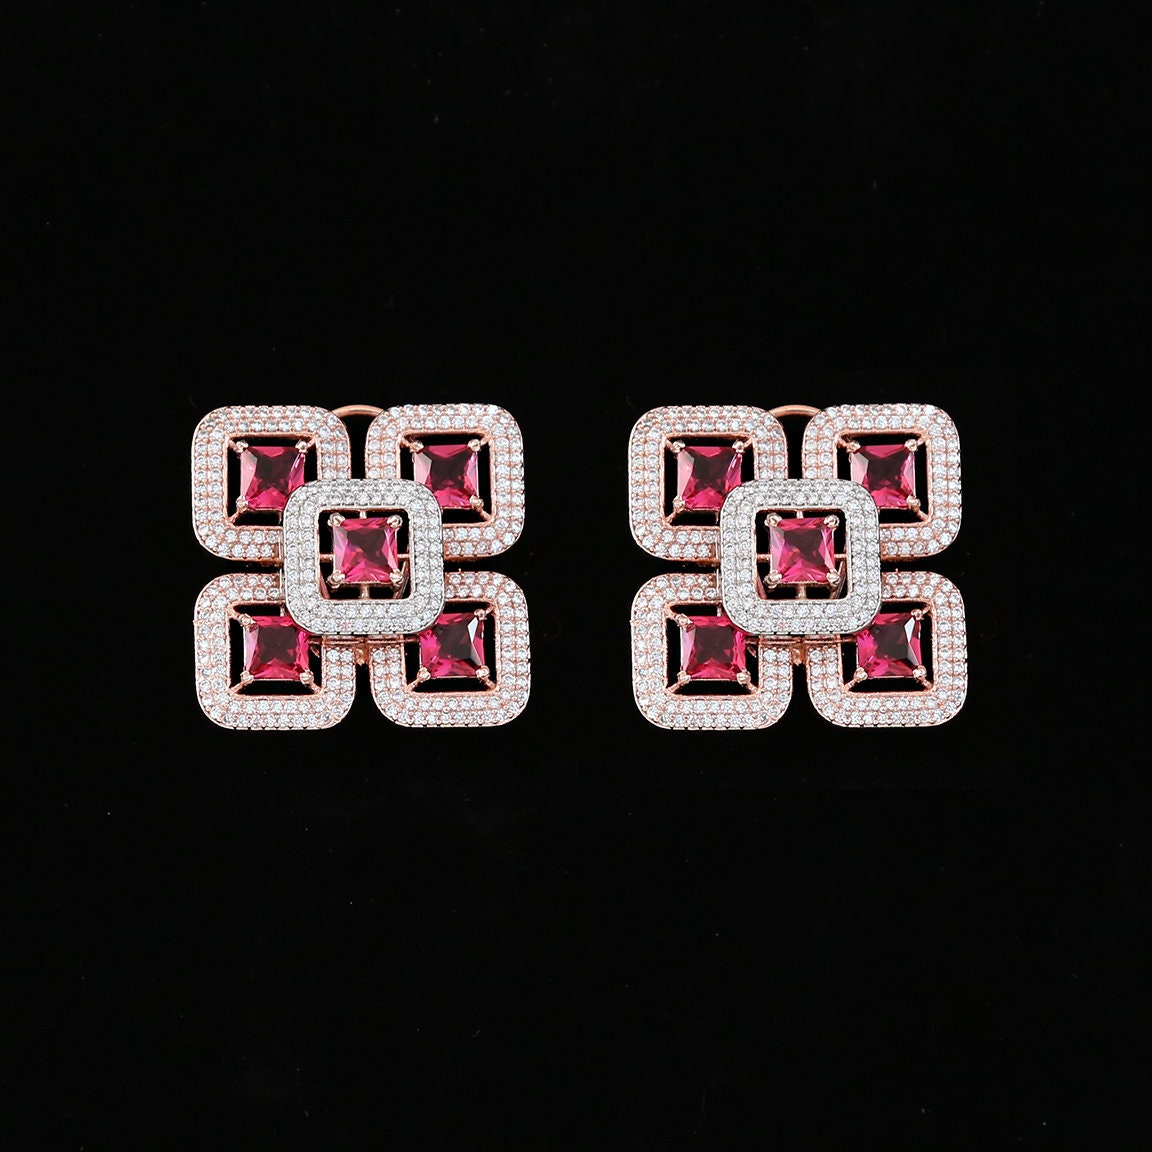 Stud earrings for women | Geometric square cluster stud earrings in rose-gold Finish |Big Indian Ruby stud earrings designs |Dual Tone Studs